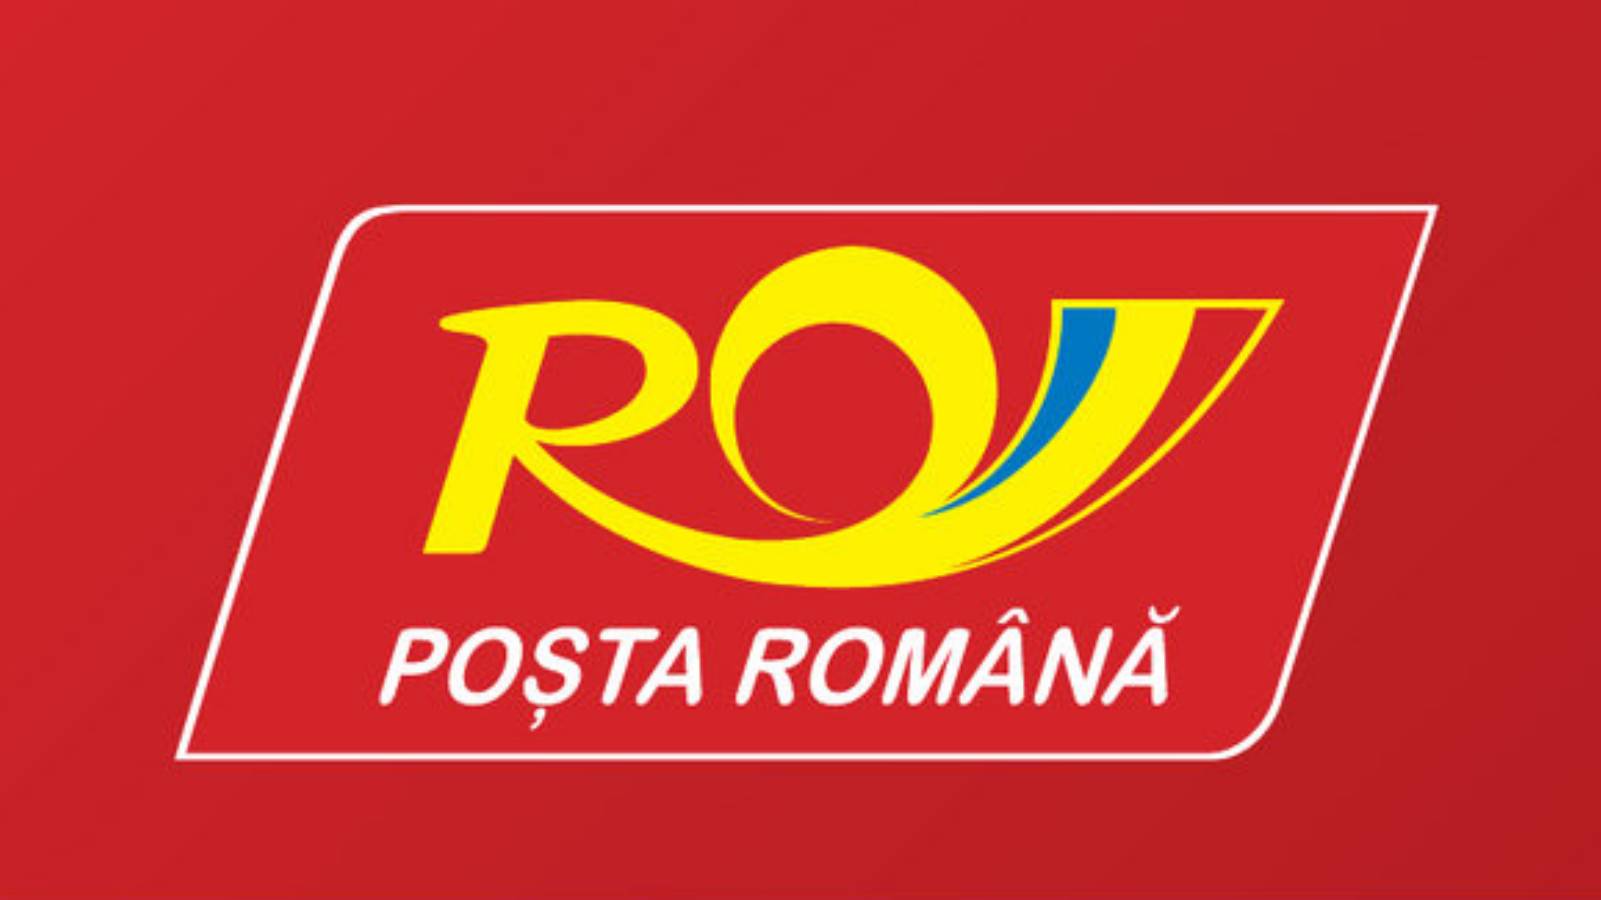 Roemeense post-arrondare